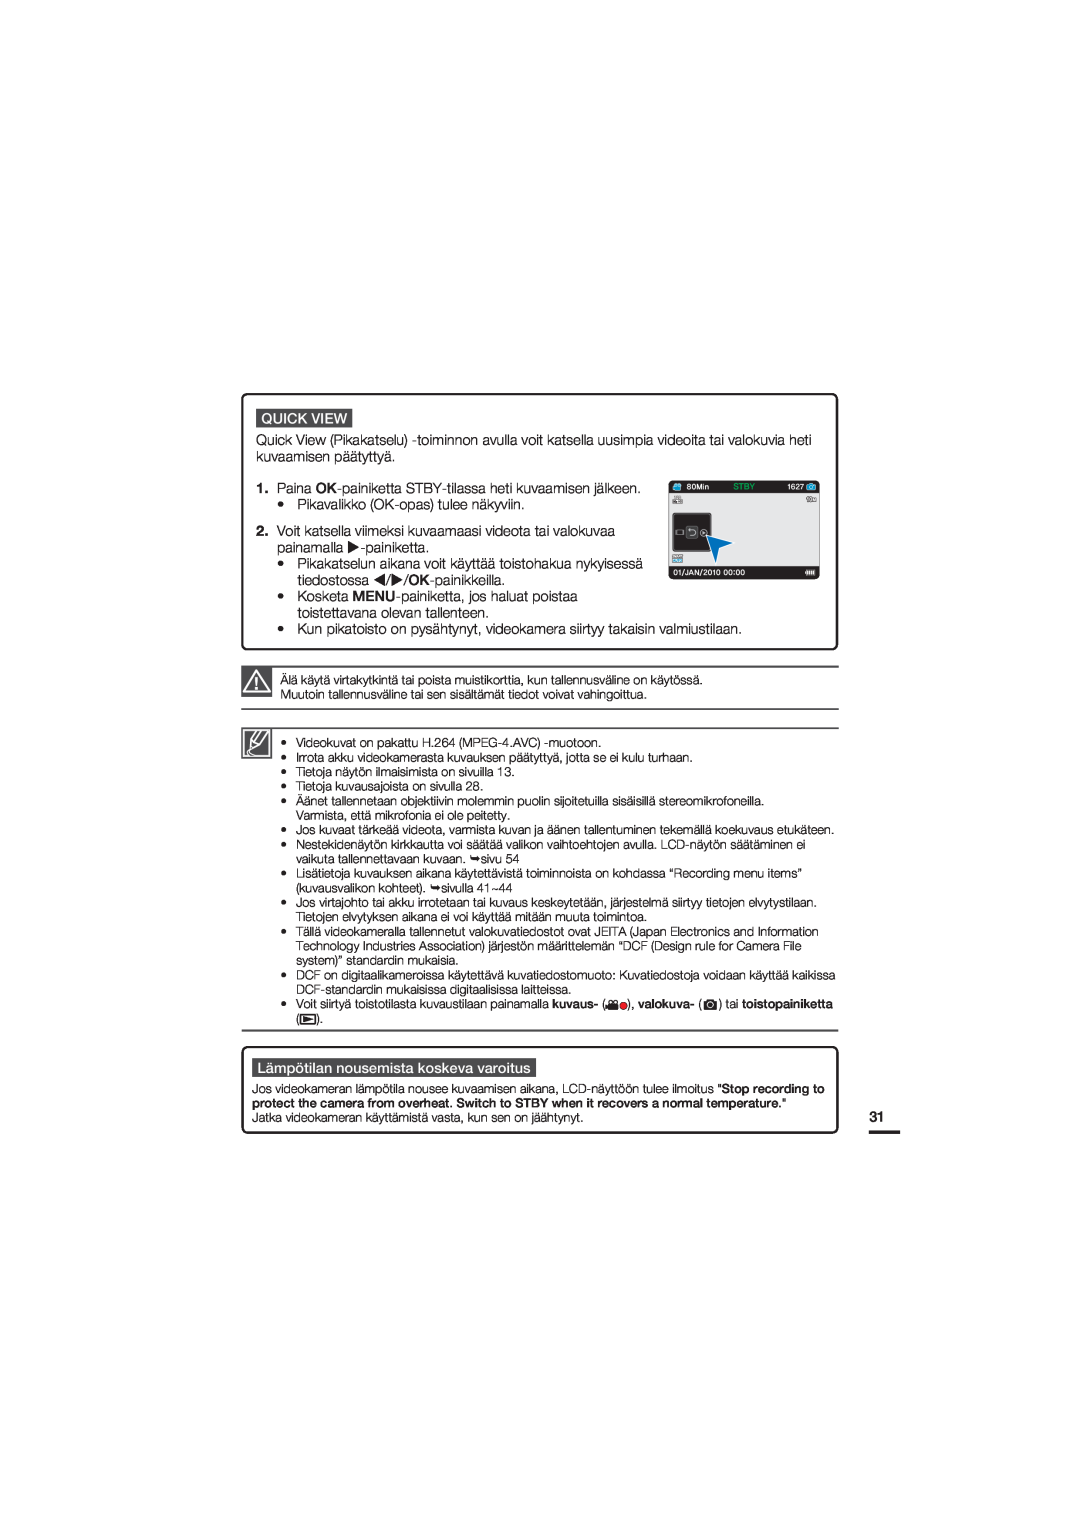 Samsung HMX-U20BP/EDC manual Quick View, Lämpötilan nousemista koskeva varoitus 